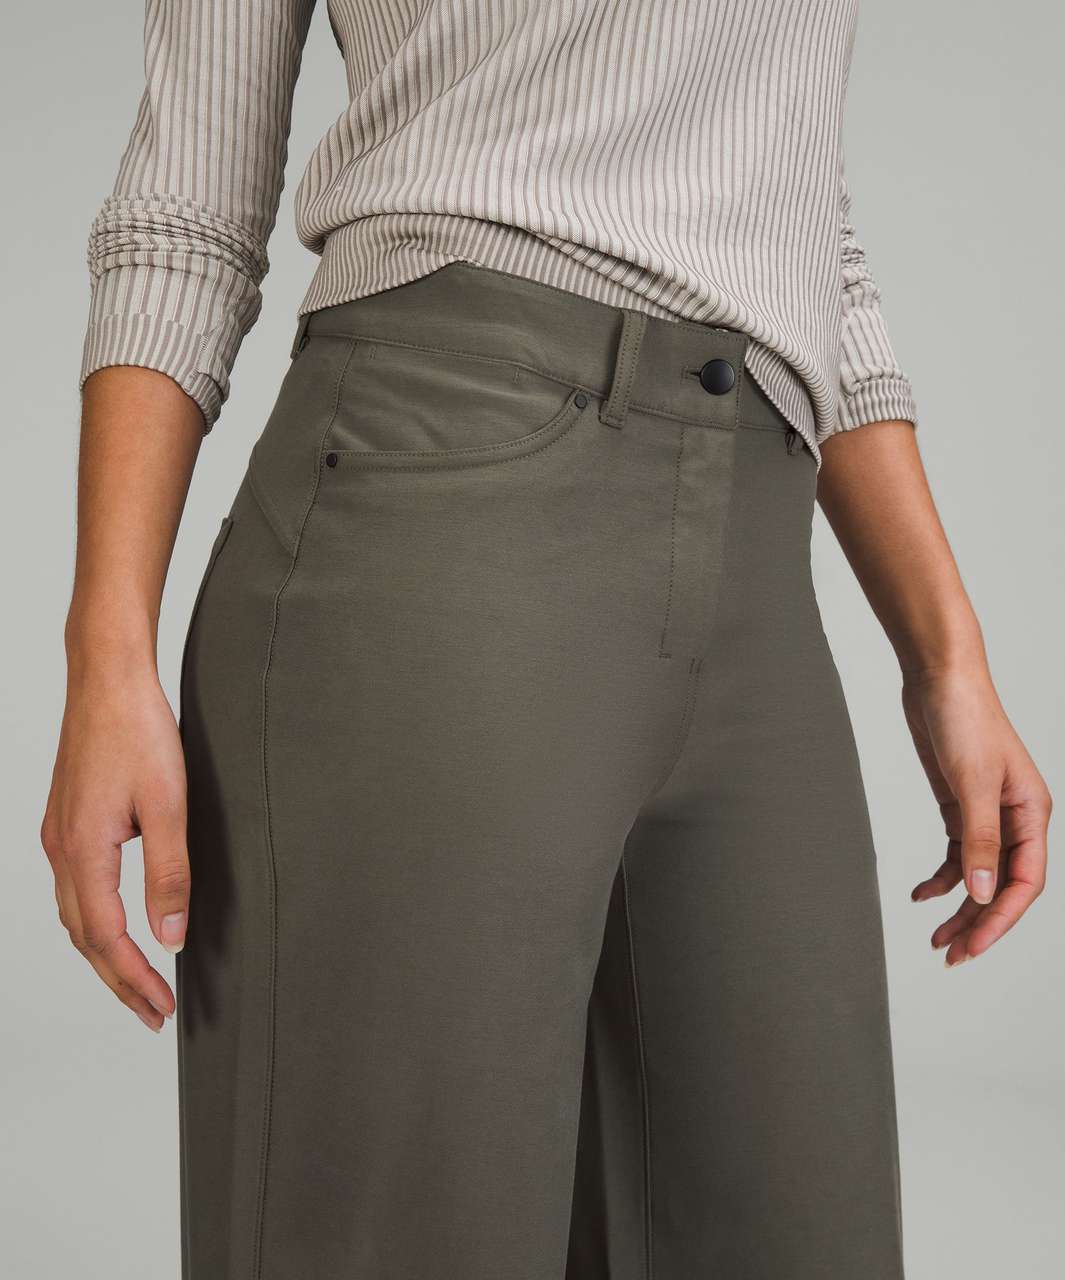 Need help pairing pants with light olive green/tan blazer. : r/mensfashion